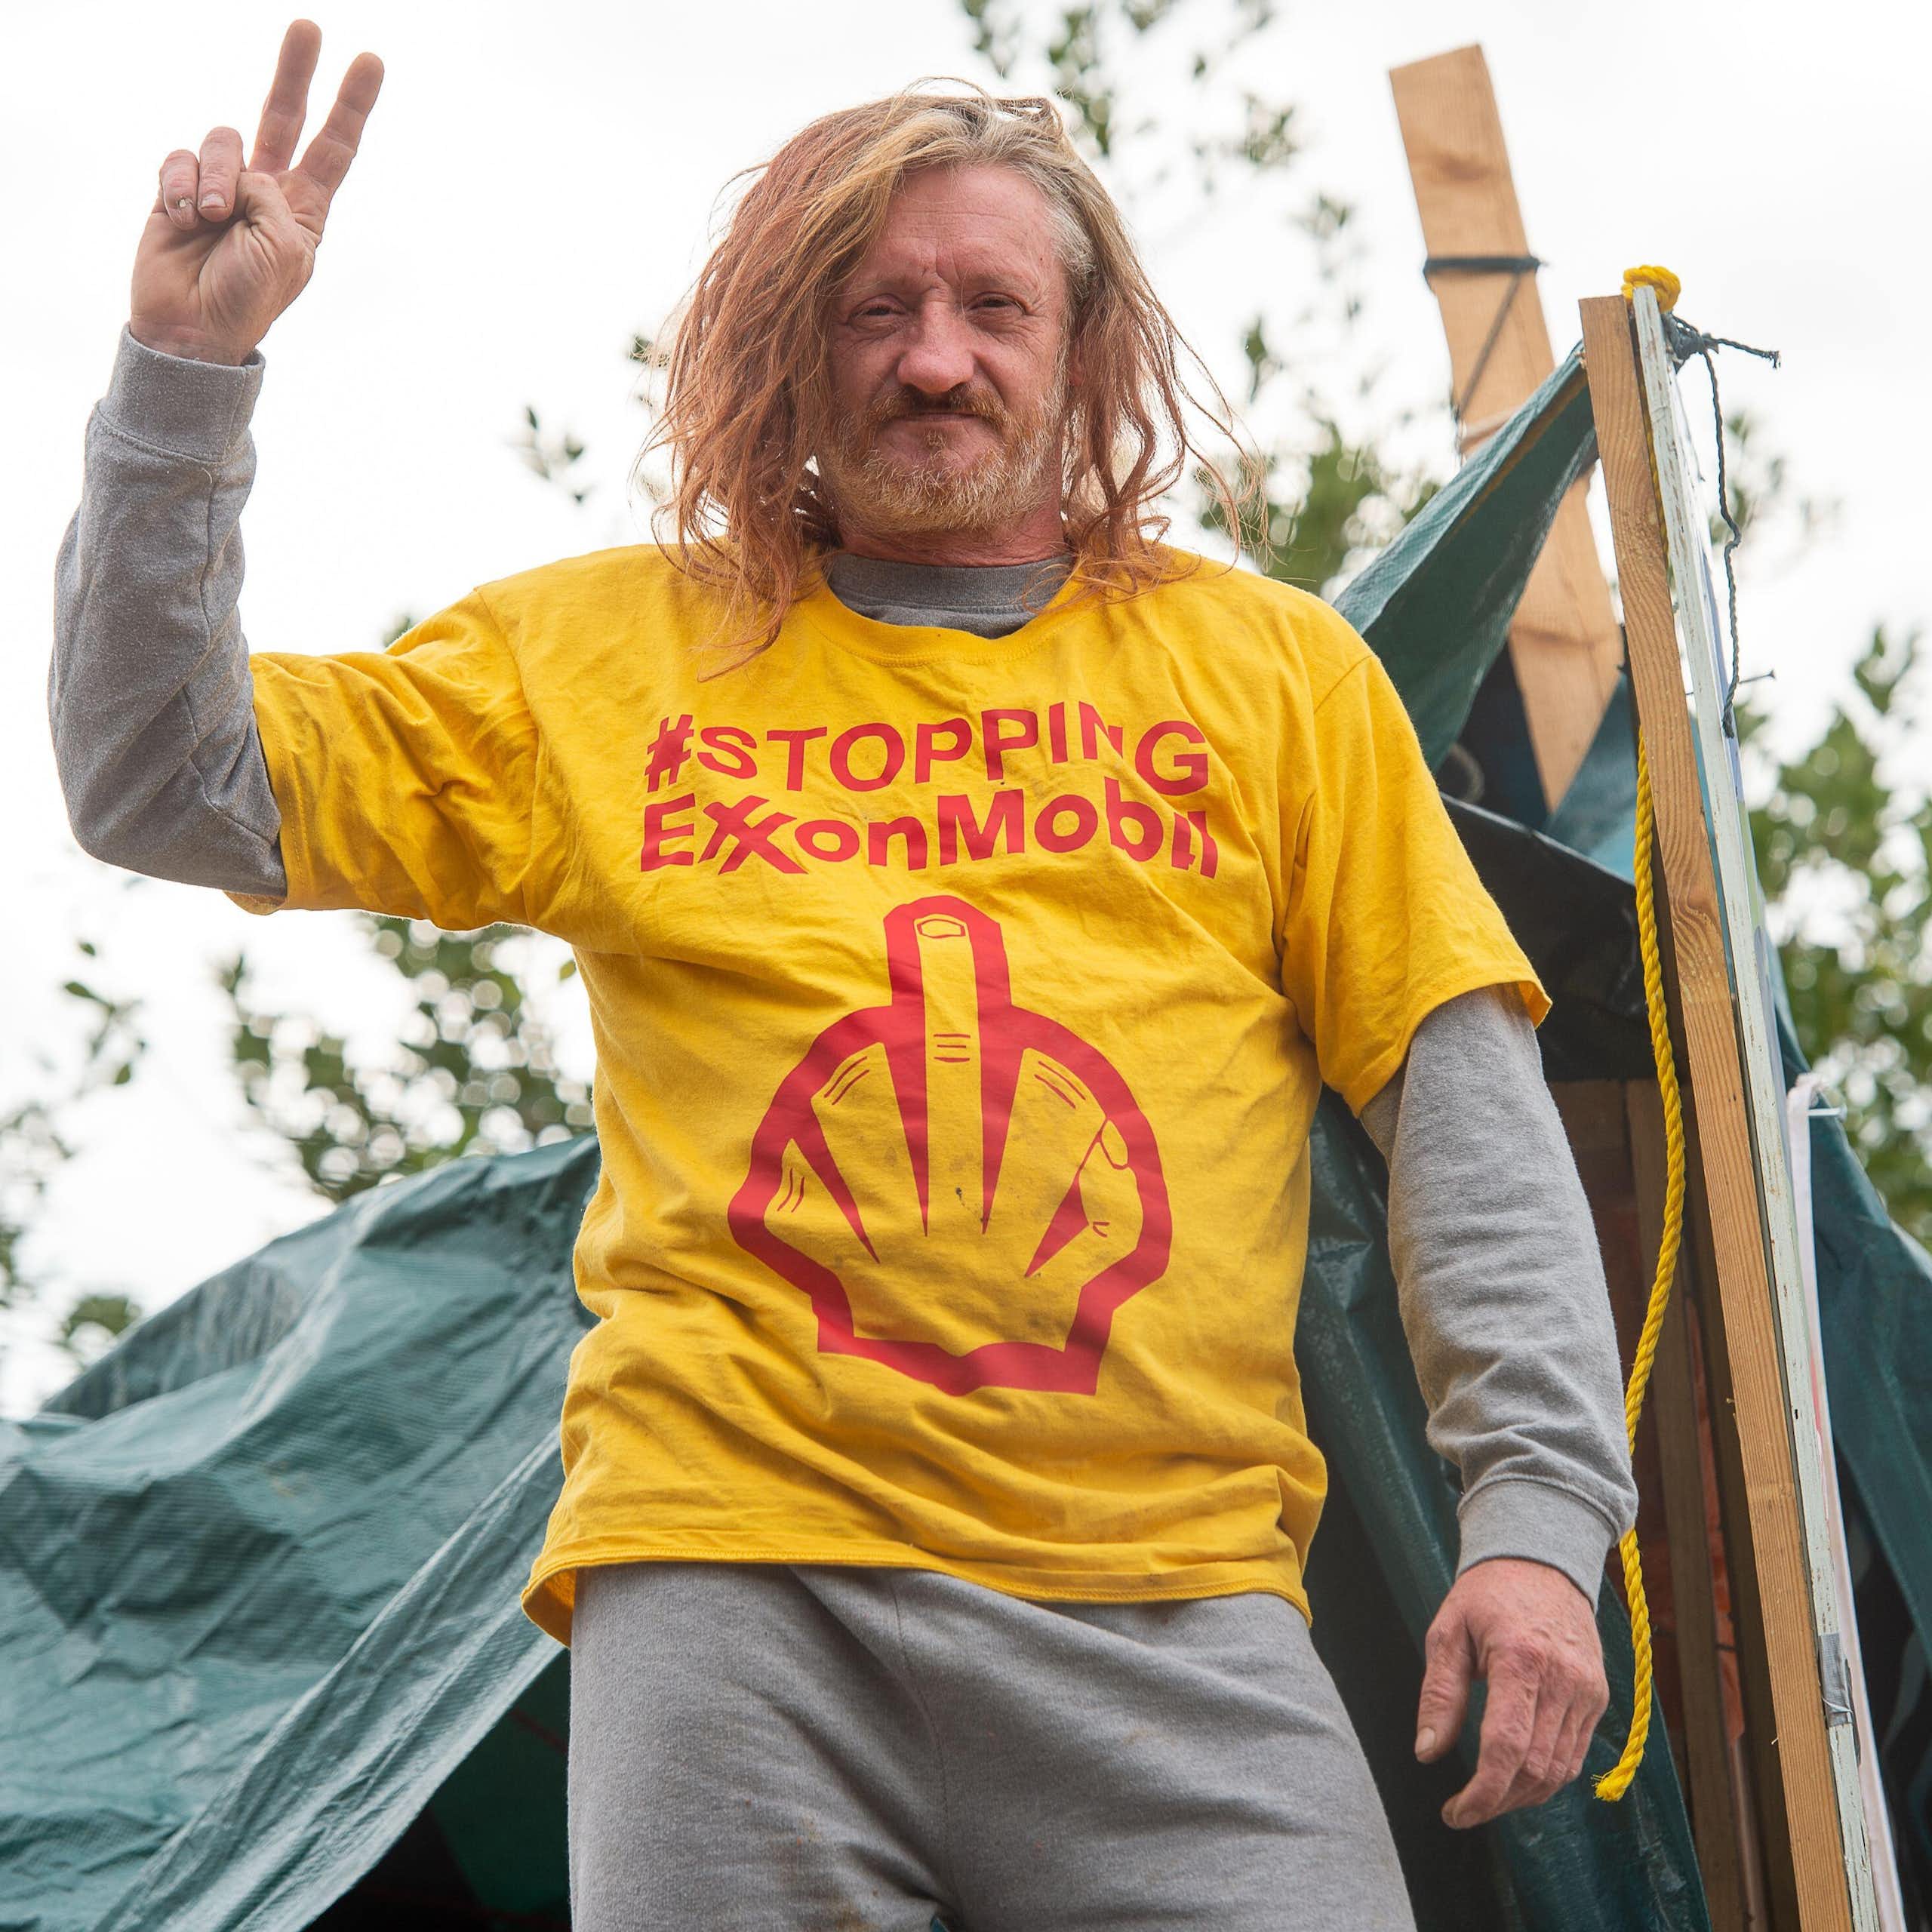 Hippy protesting against Exxon